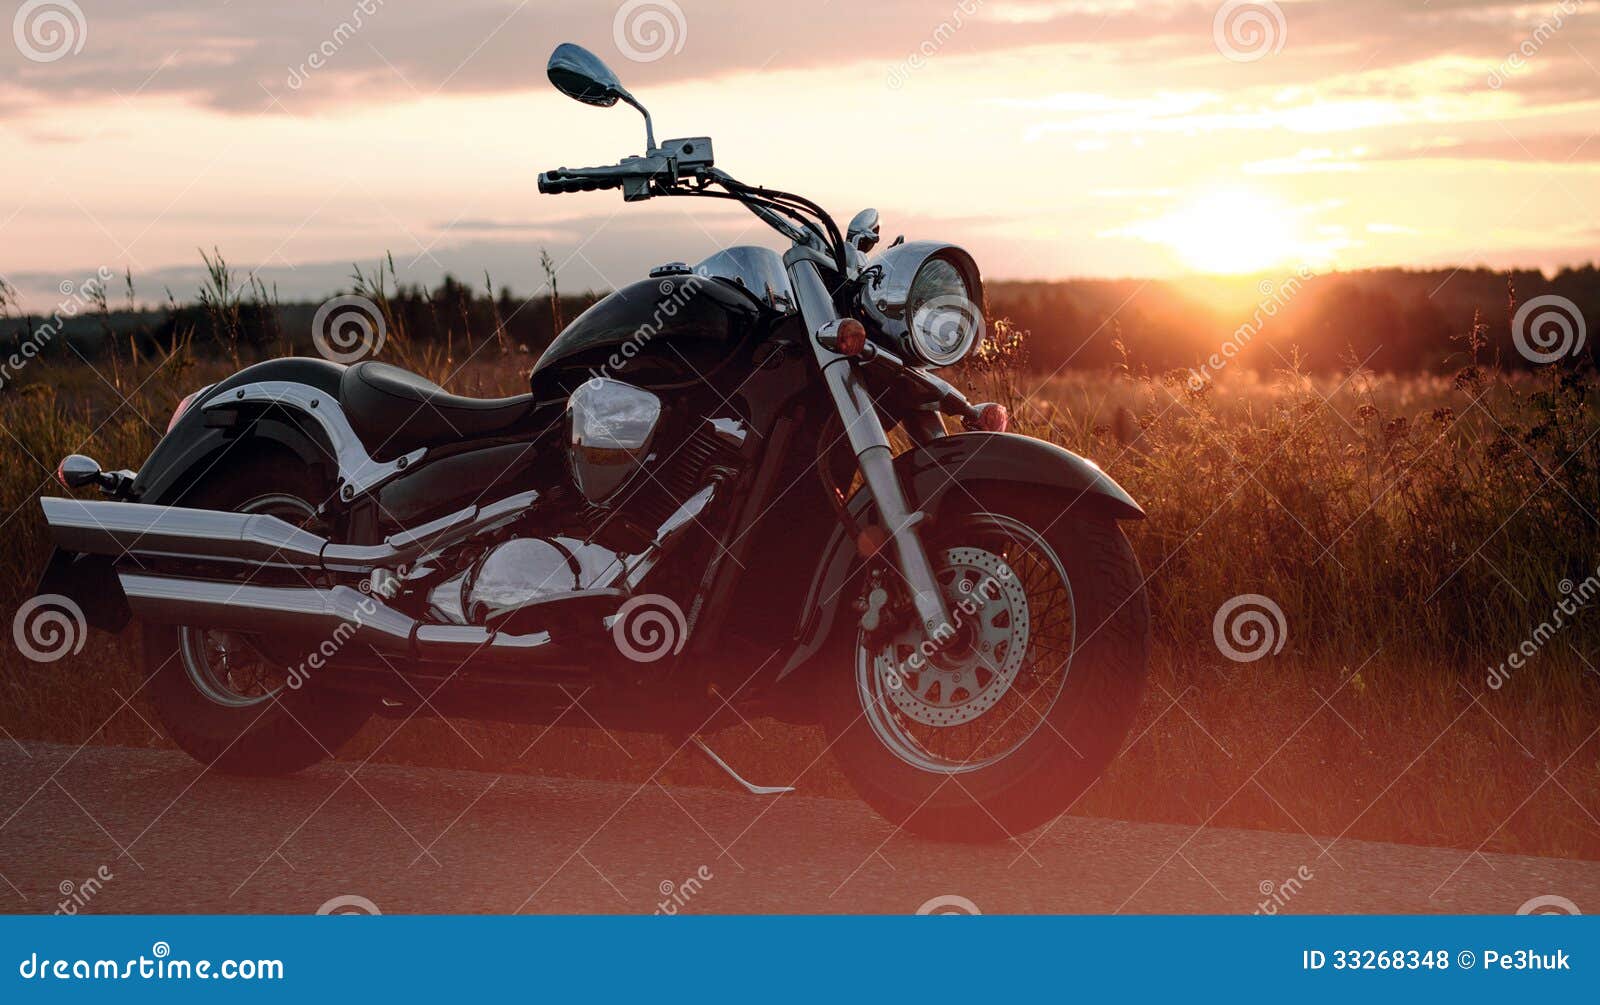 motorcycle on the roadside